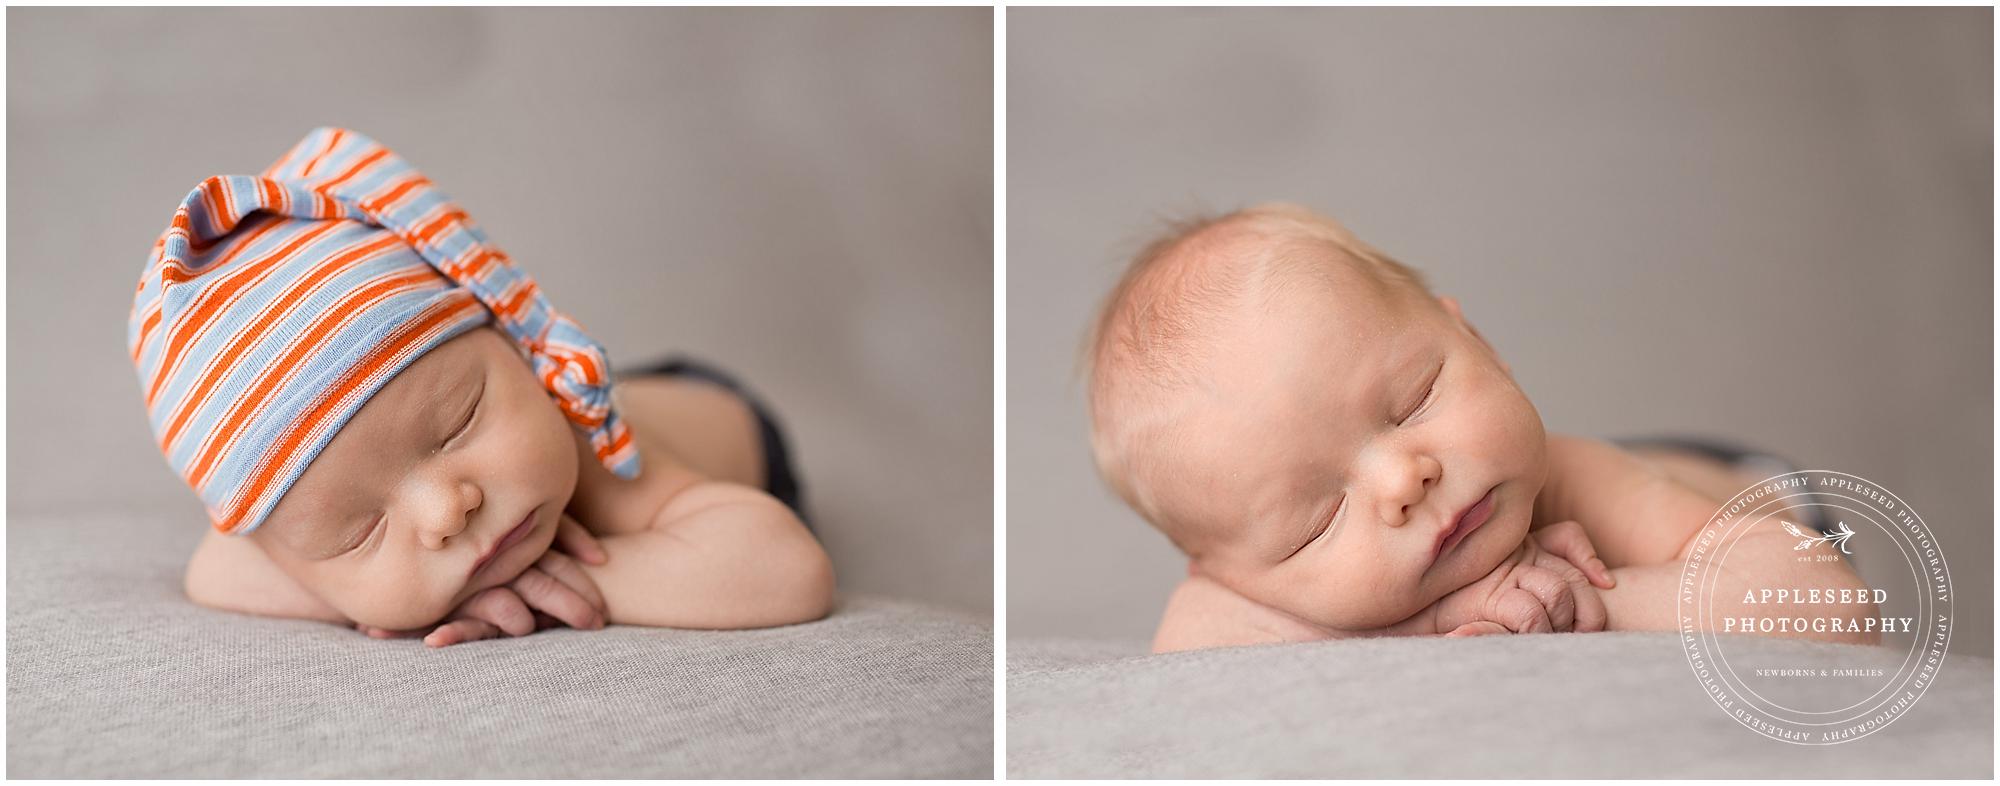 Atlanta Newborn Photographer | Baby Crew | Appleseed Photography